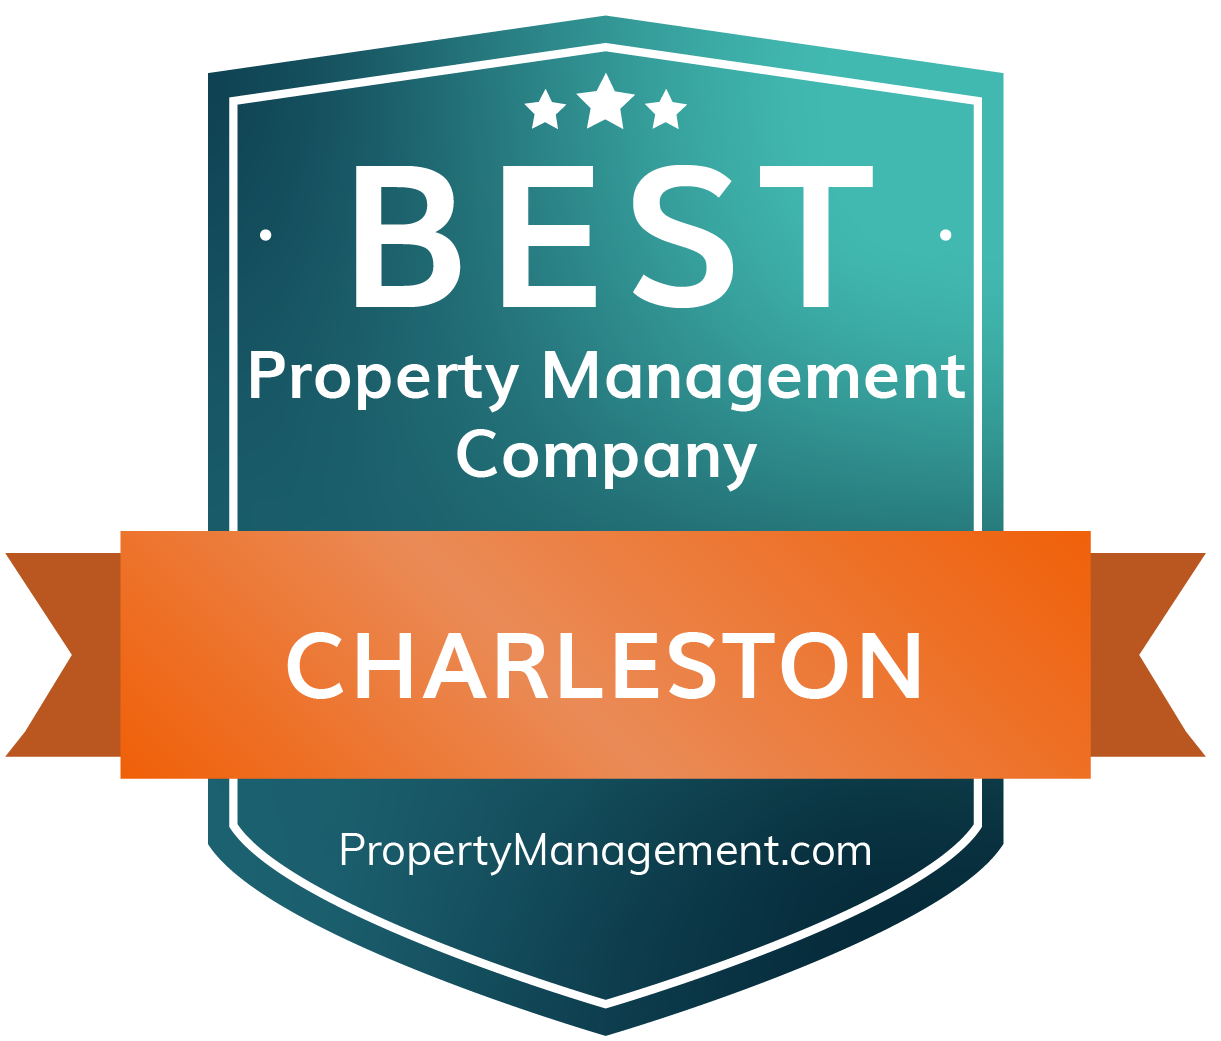 Best Property Management Chrleston